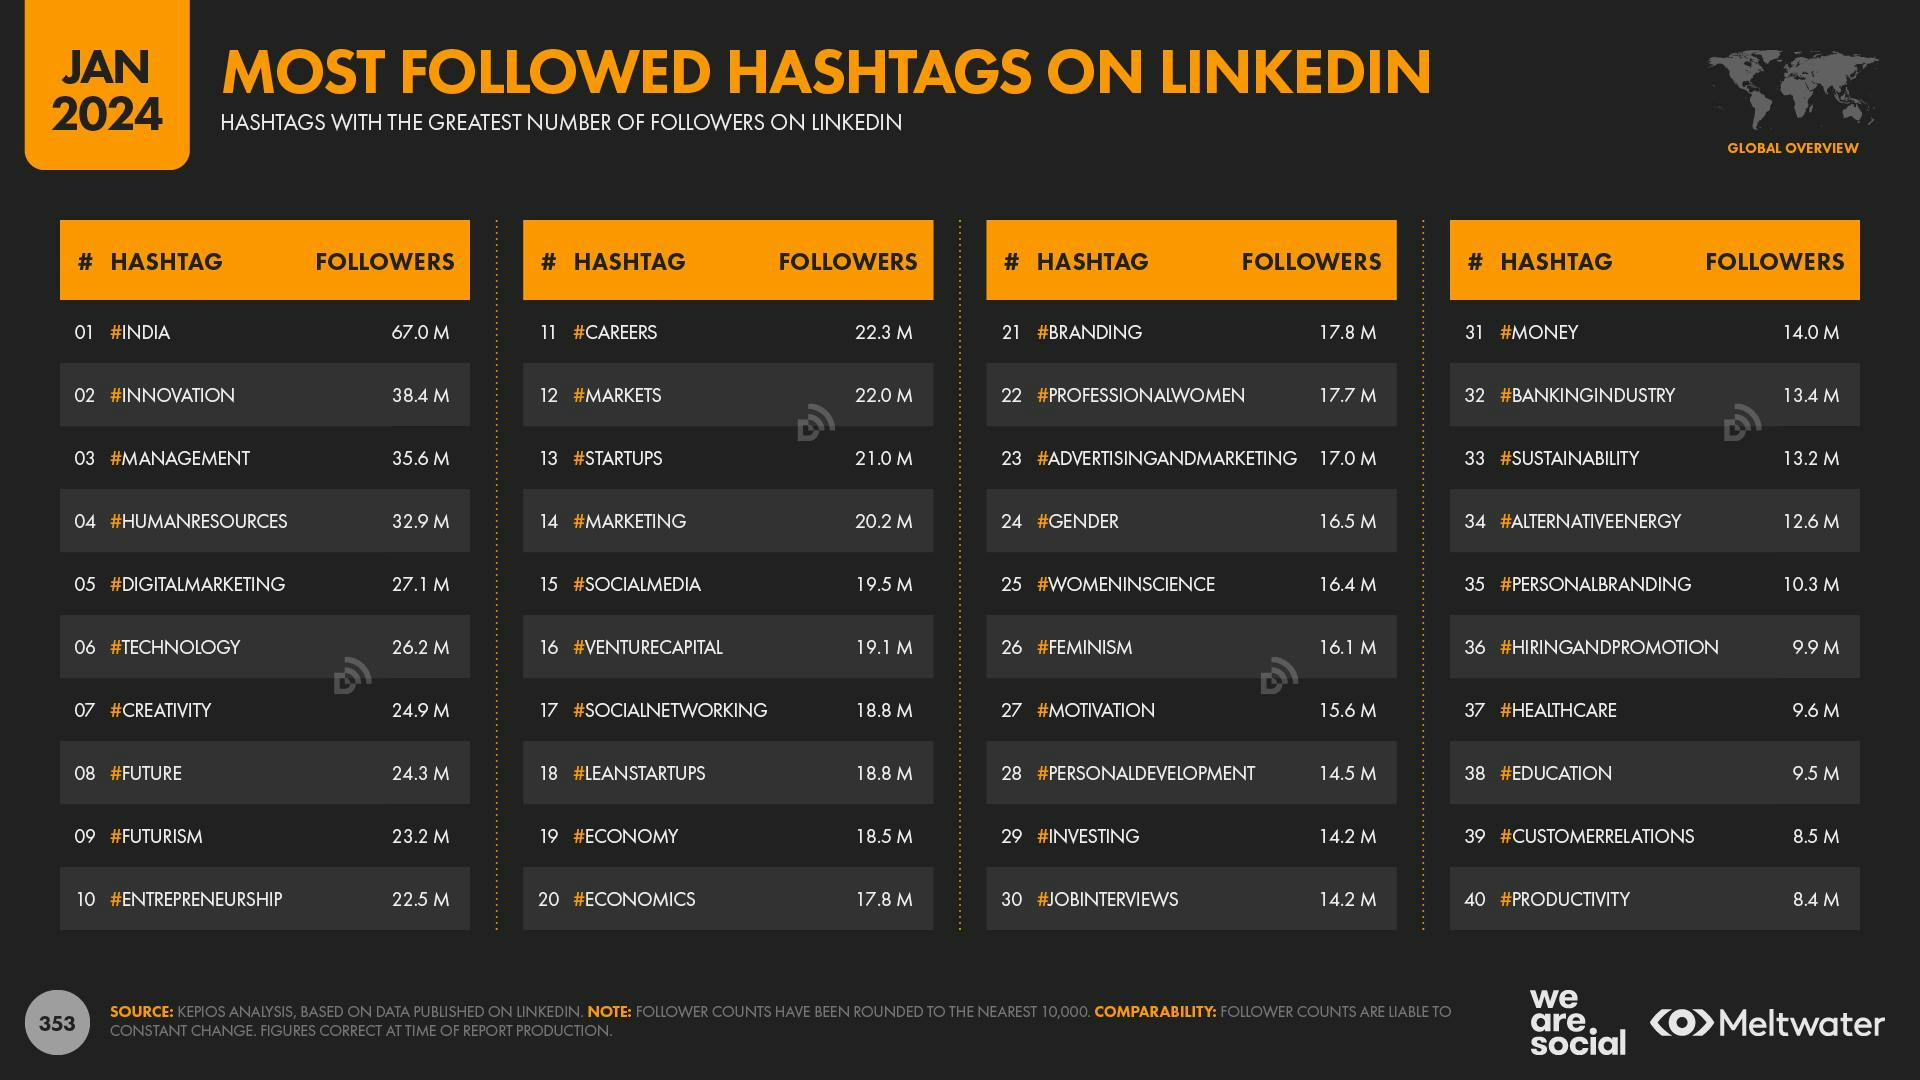 Most followed hashtags on LinkedIn